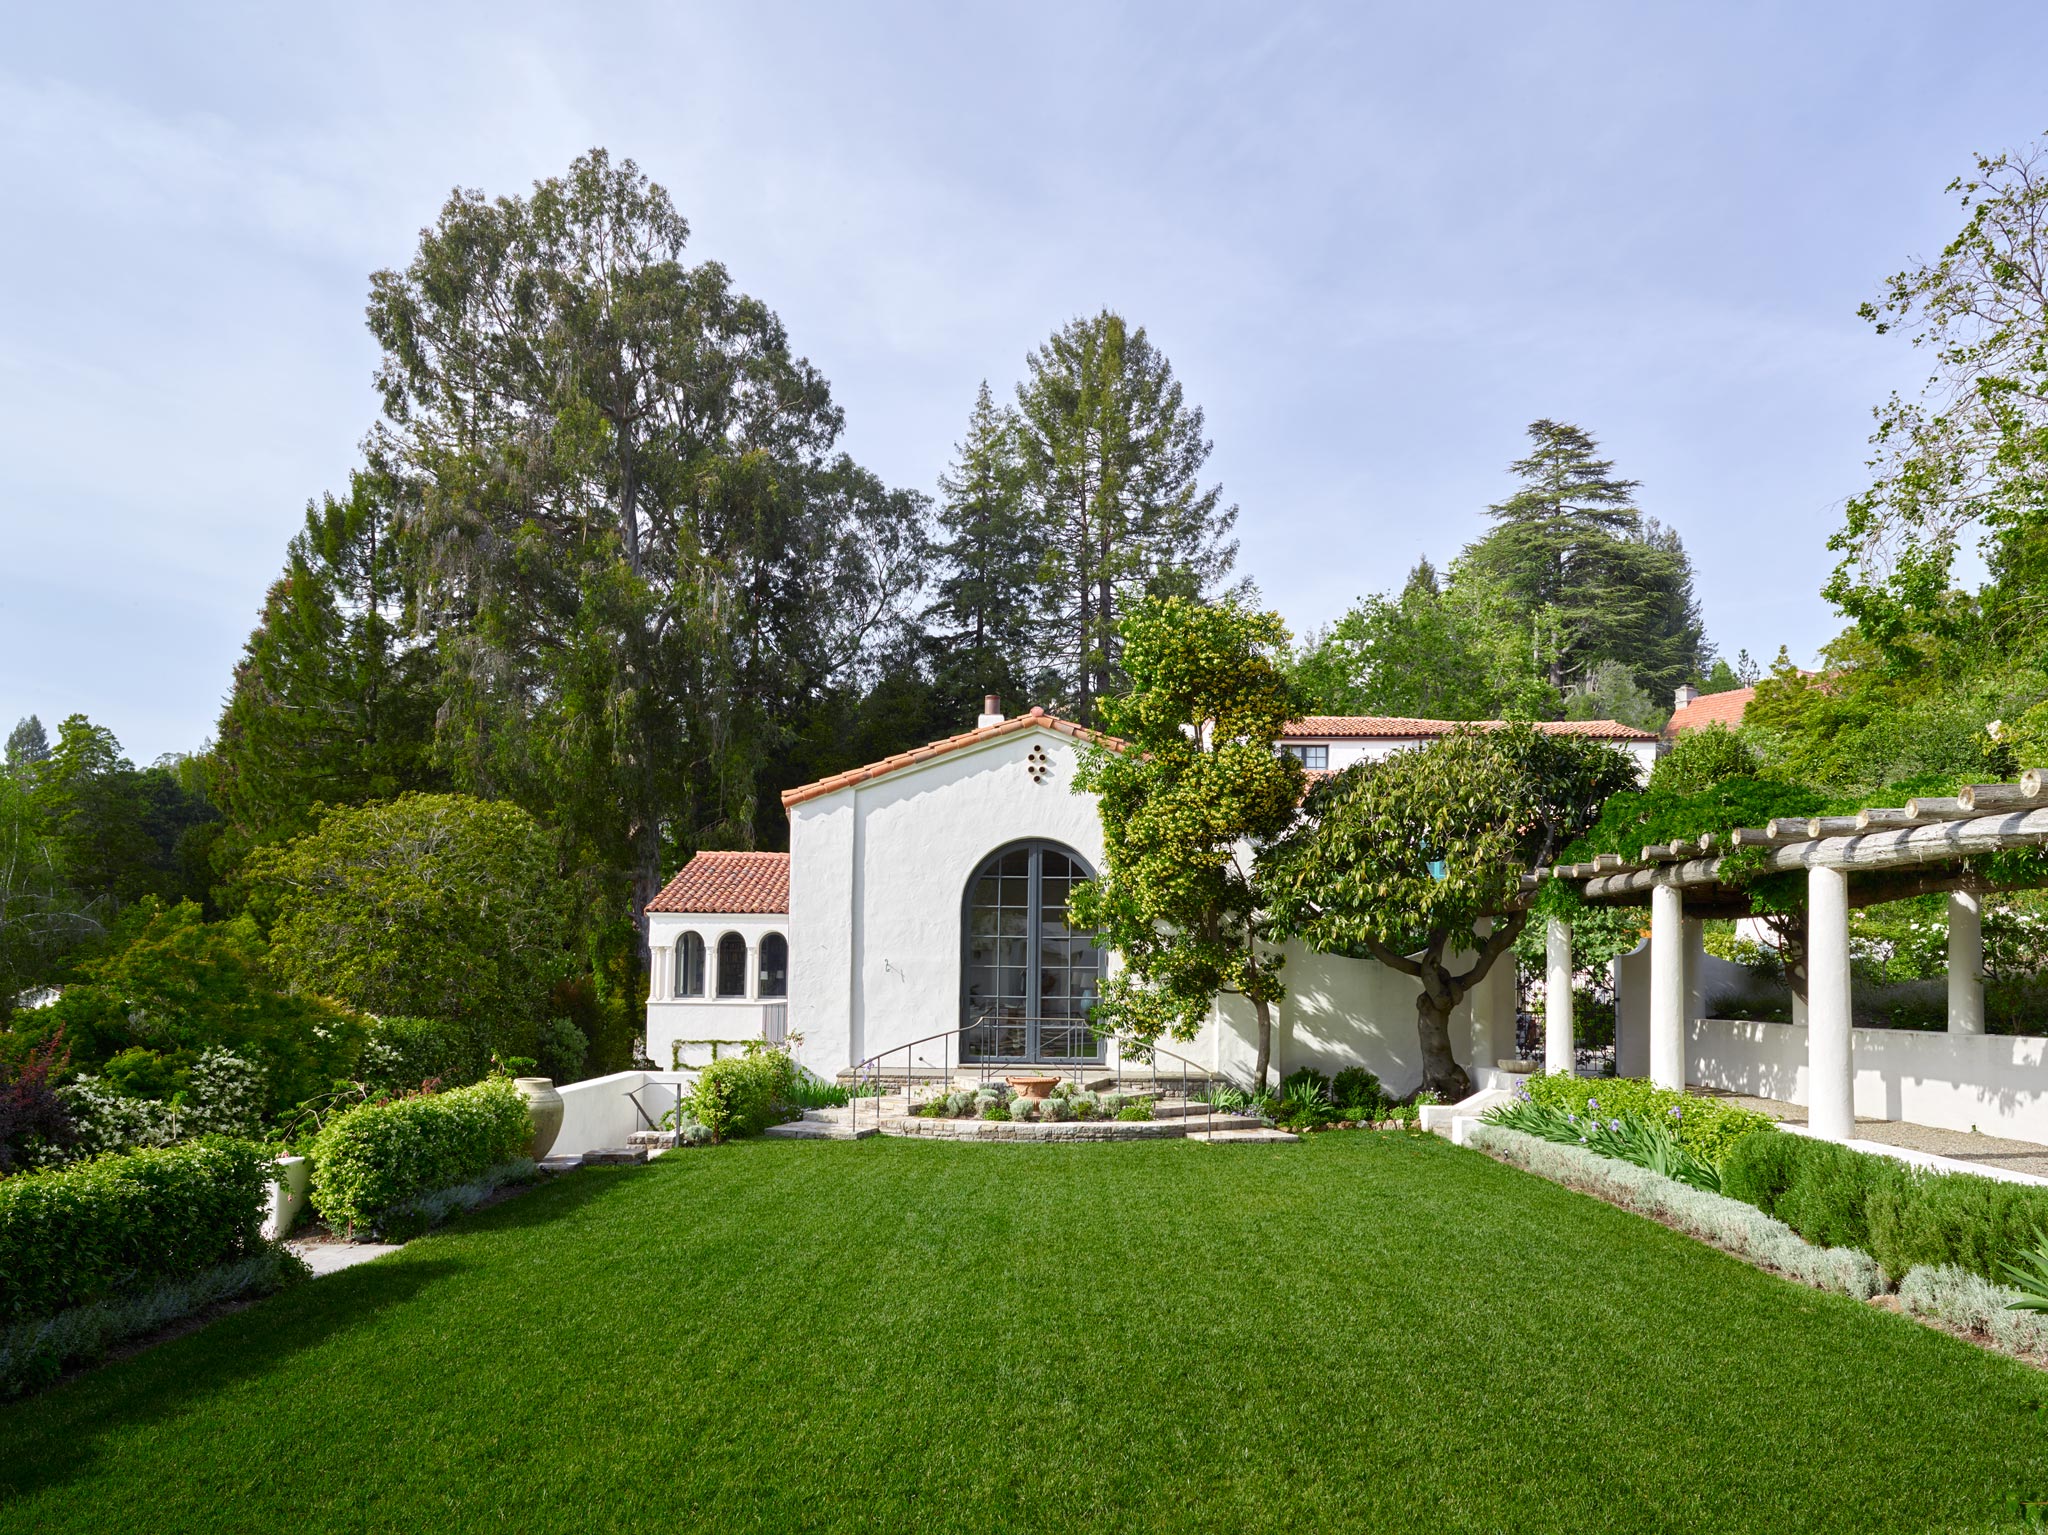 McDuffie Estate in Berkeley exterior view of house and garden